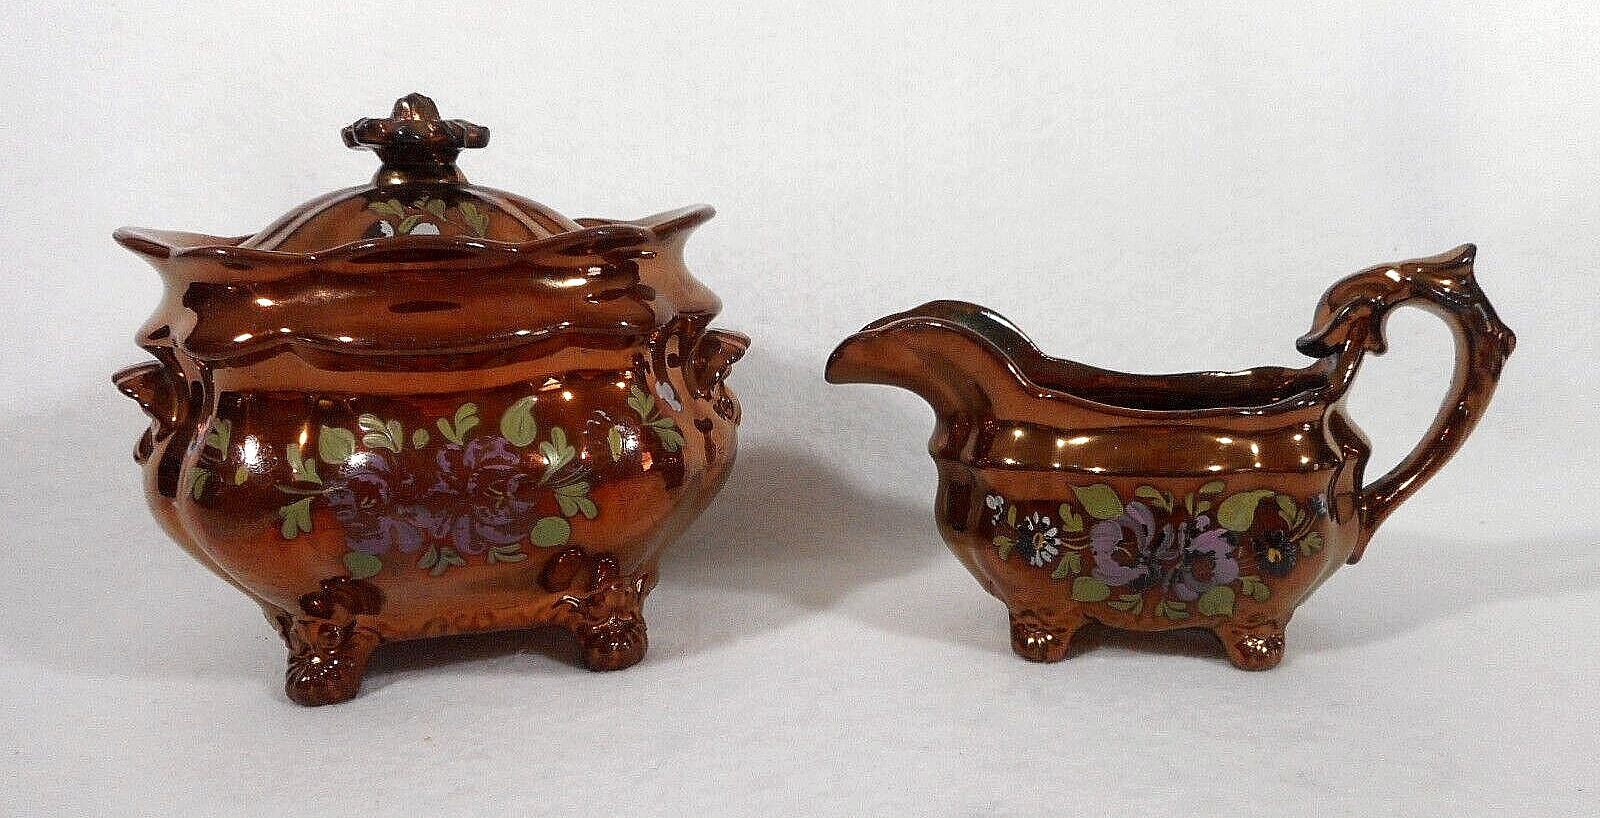 Antique Copper Lusterware Sugar and Creamer with Floral Design